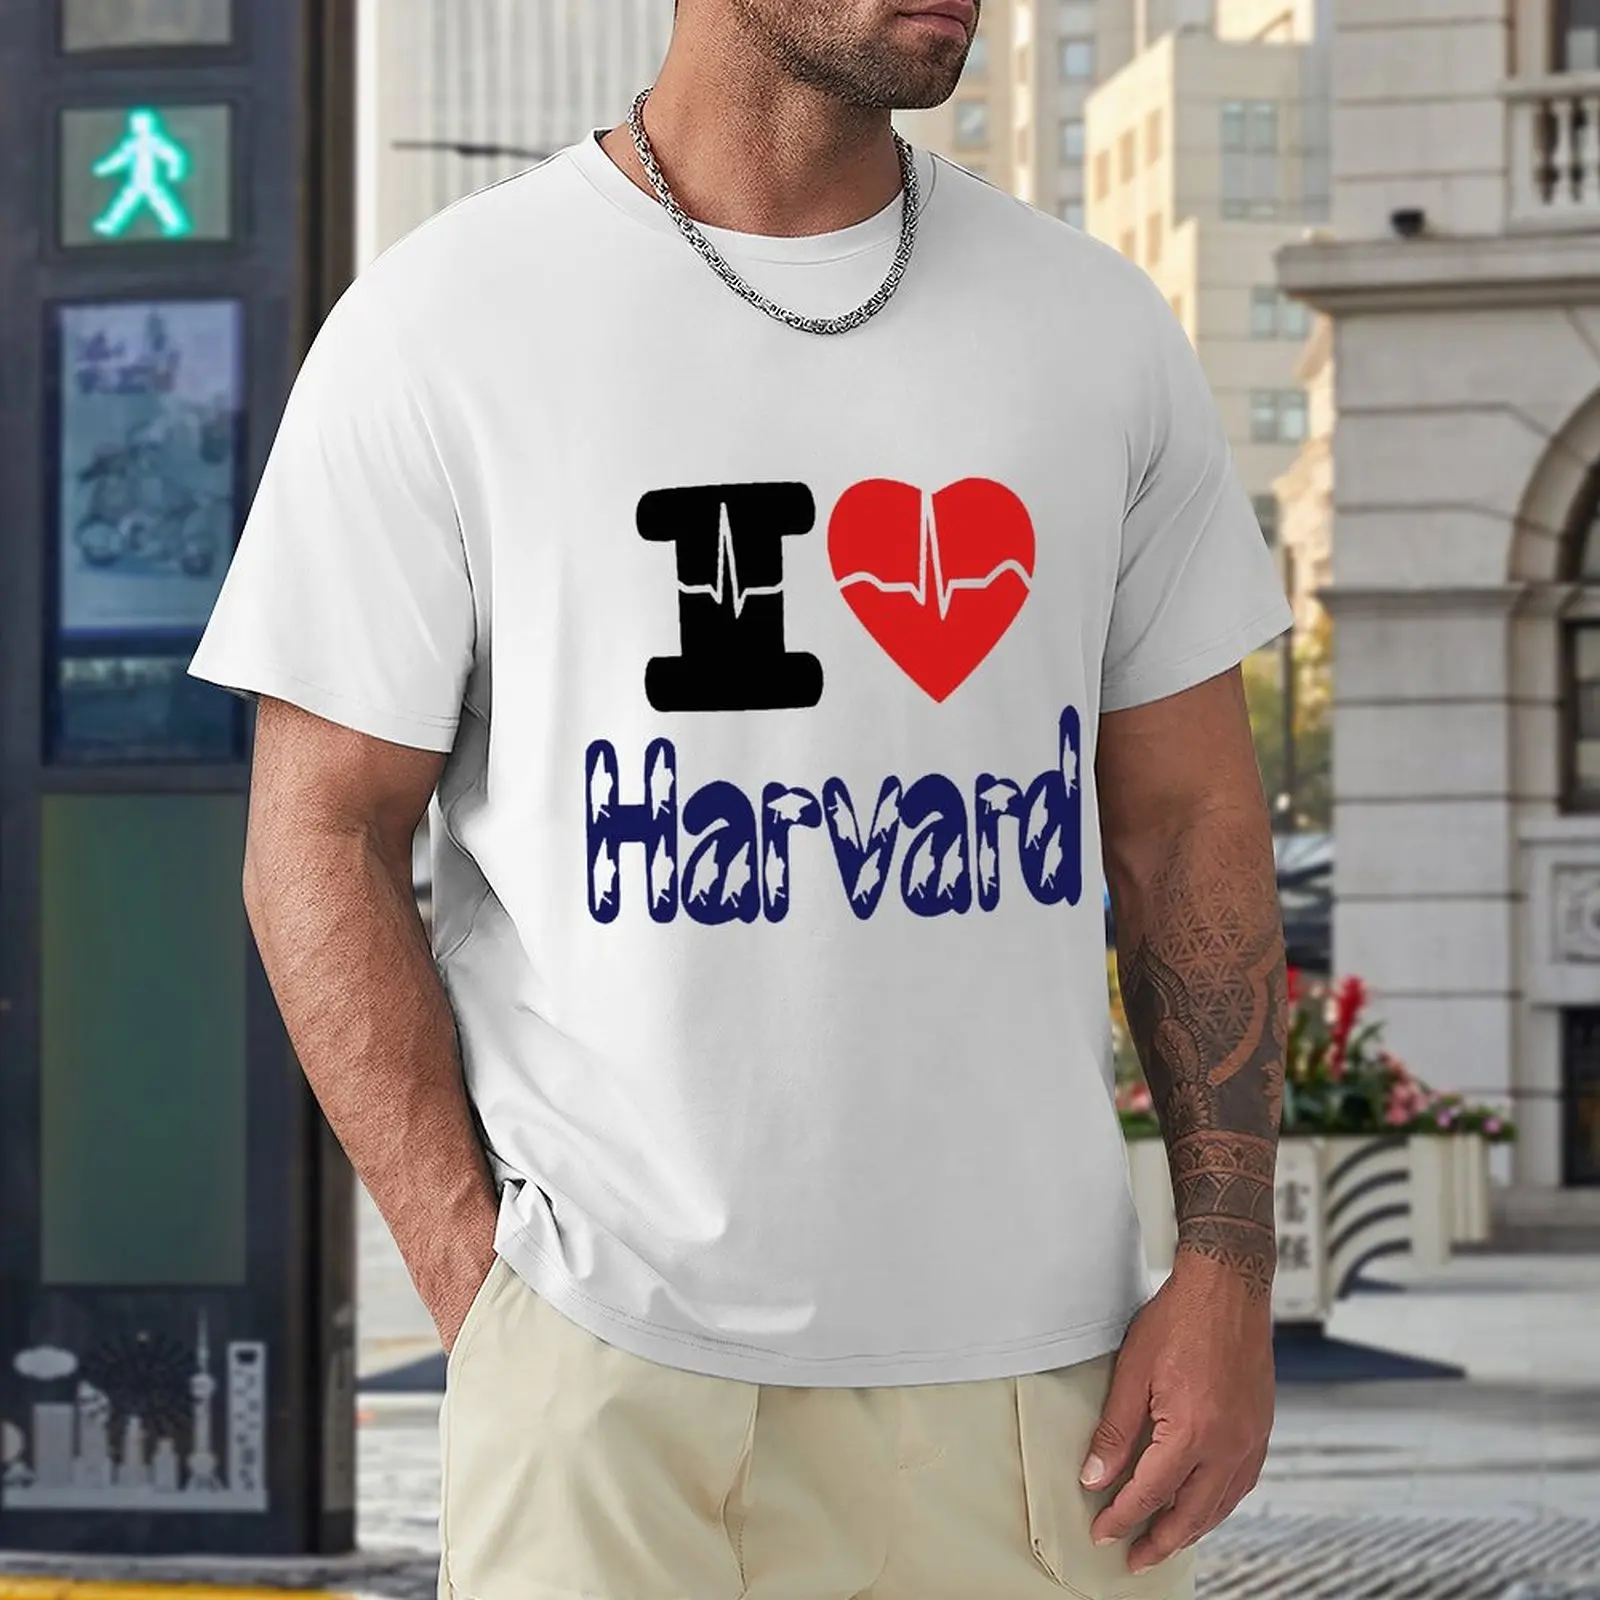 

I Love Harvard T Shirts Men Shirt Fashion Clothes Graphics Sweatshirt 100% Cotton TShirts Tee Top